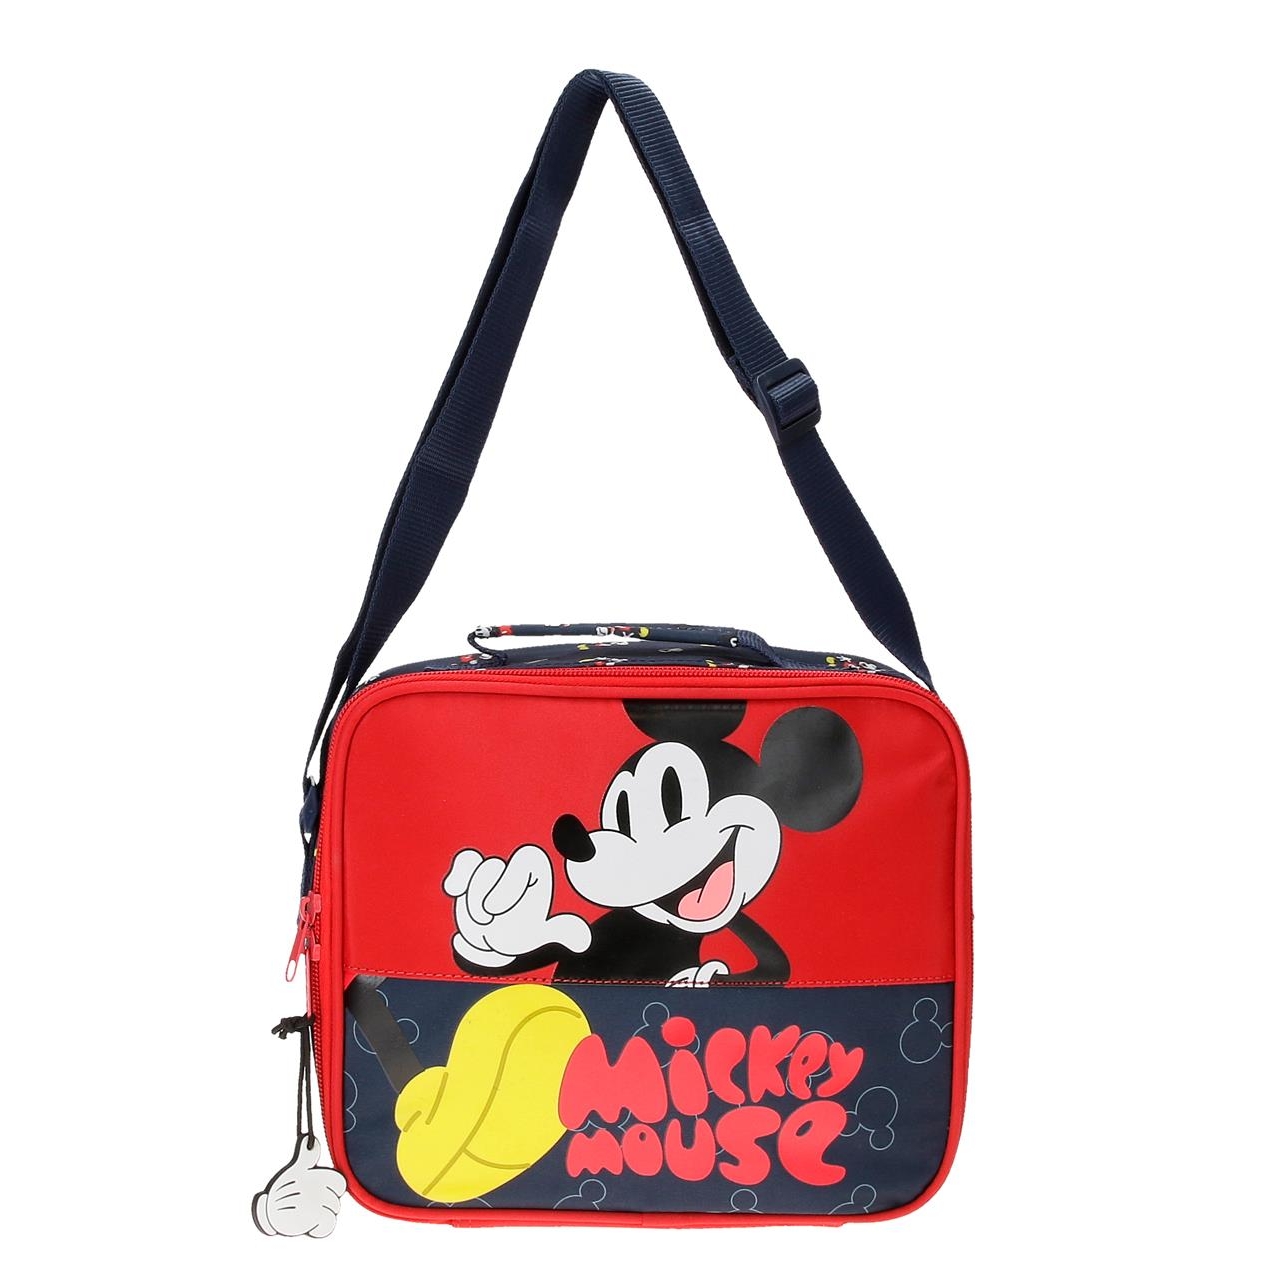 Neceser Adaptable Mickey Mouse Fashion con Bandolera